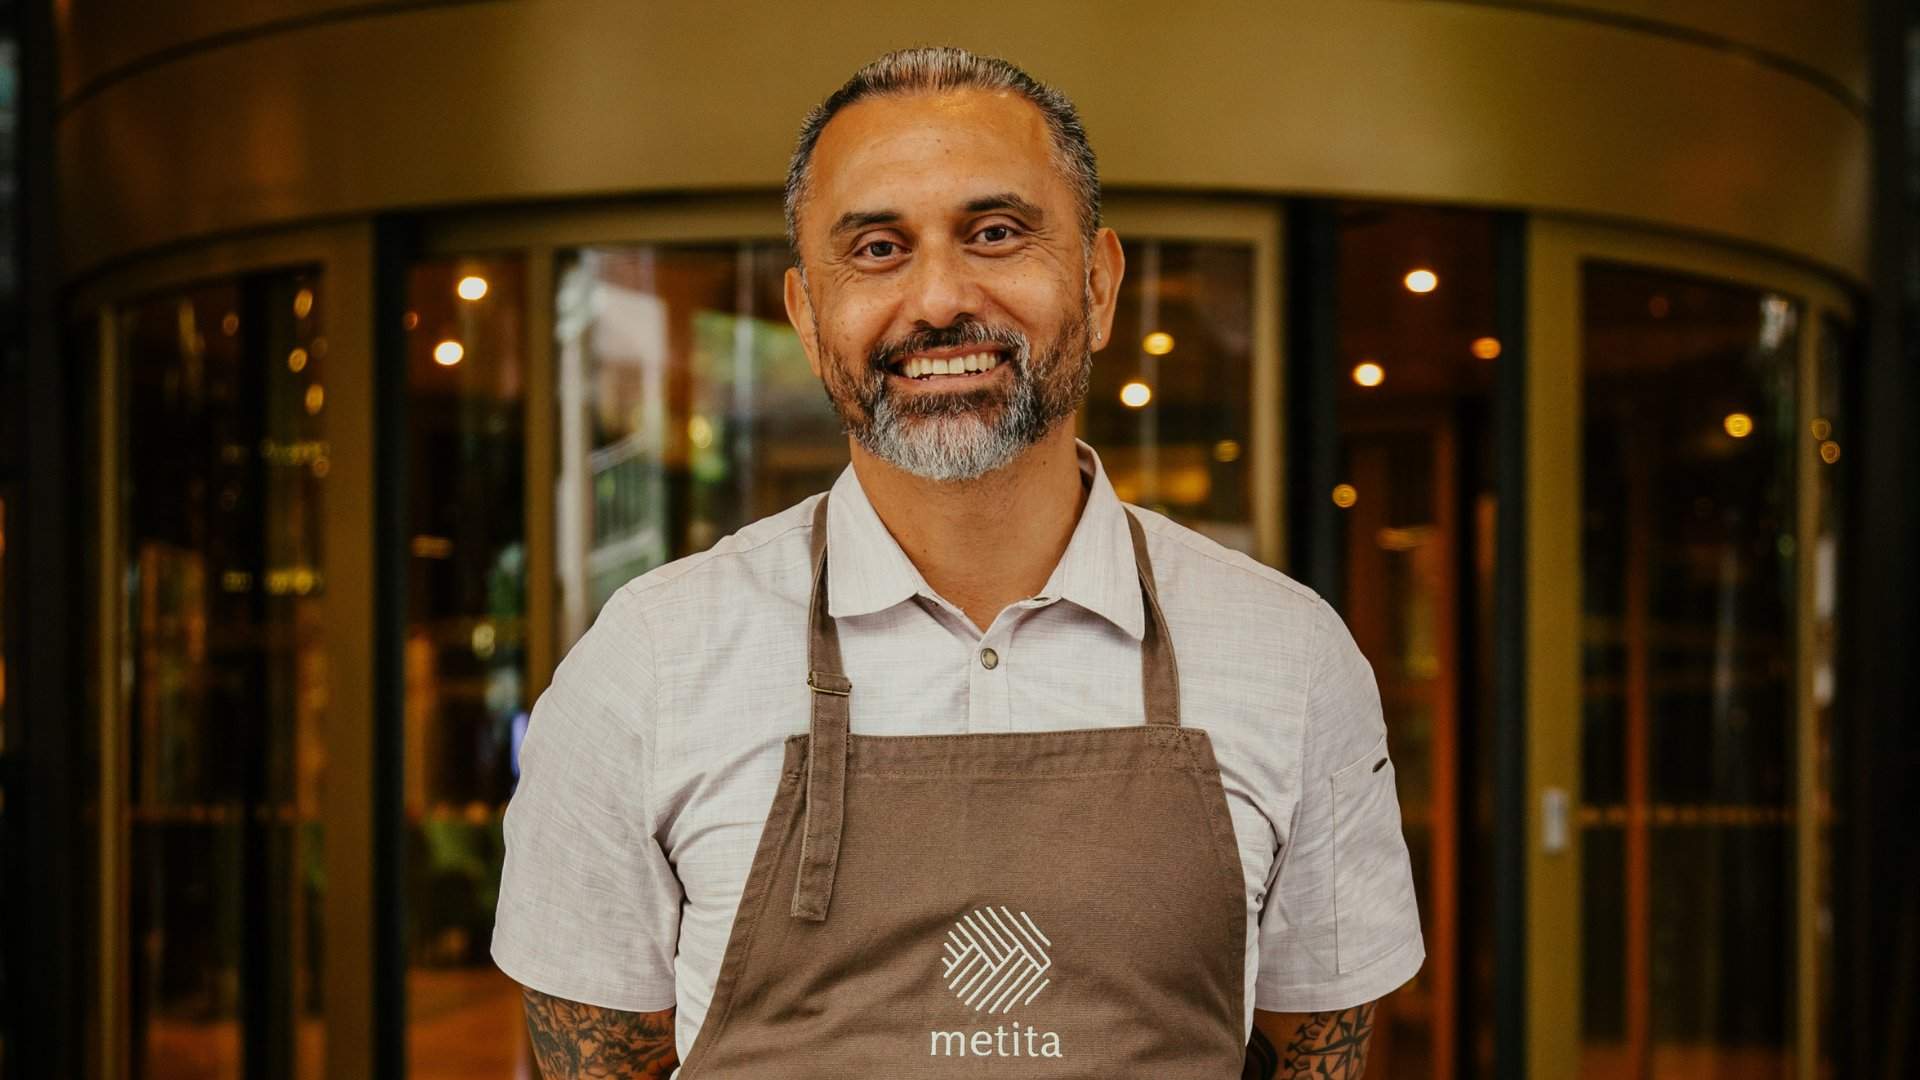 Coming Soon: Metita Is Chef Michael Meredith's New Restaurant Focusing on Pasifika Cuisine